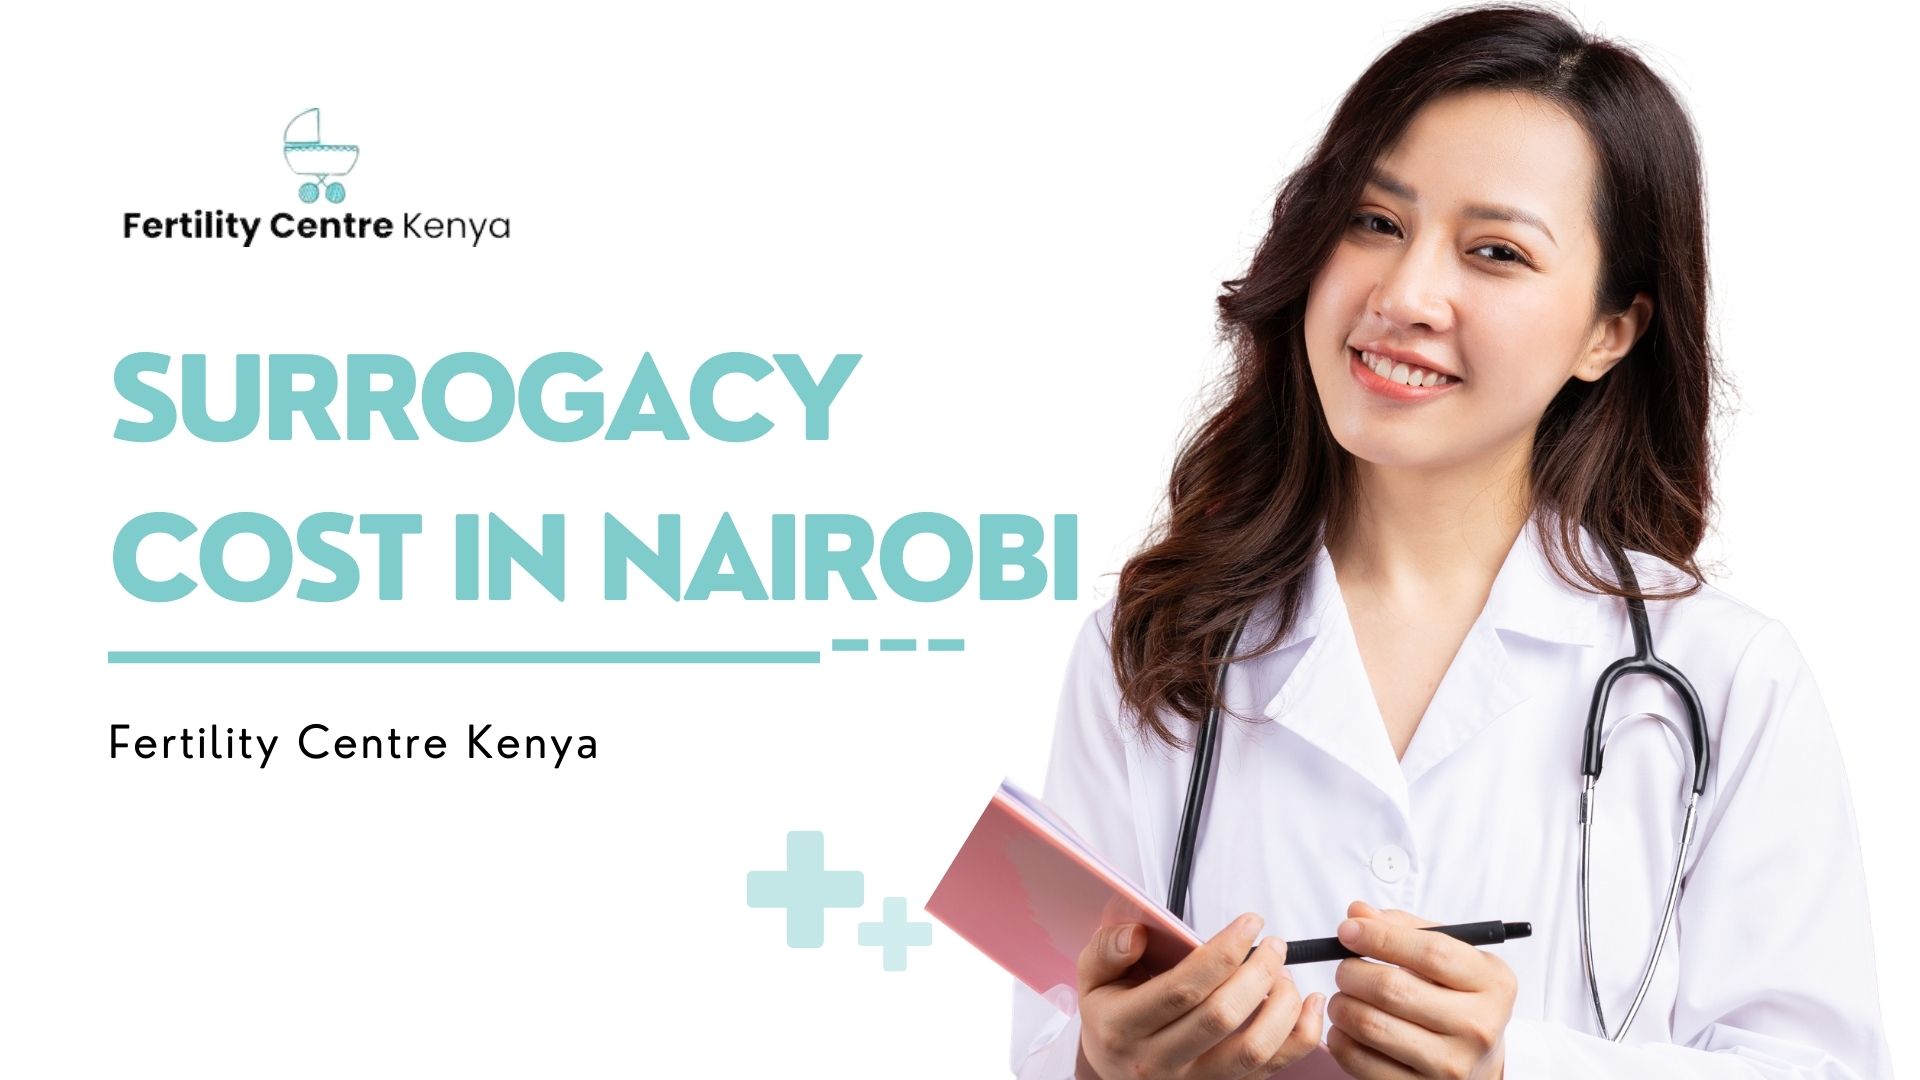 Surrogacy Cost in Nairobi - Fertility Centre Kenya